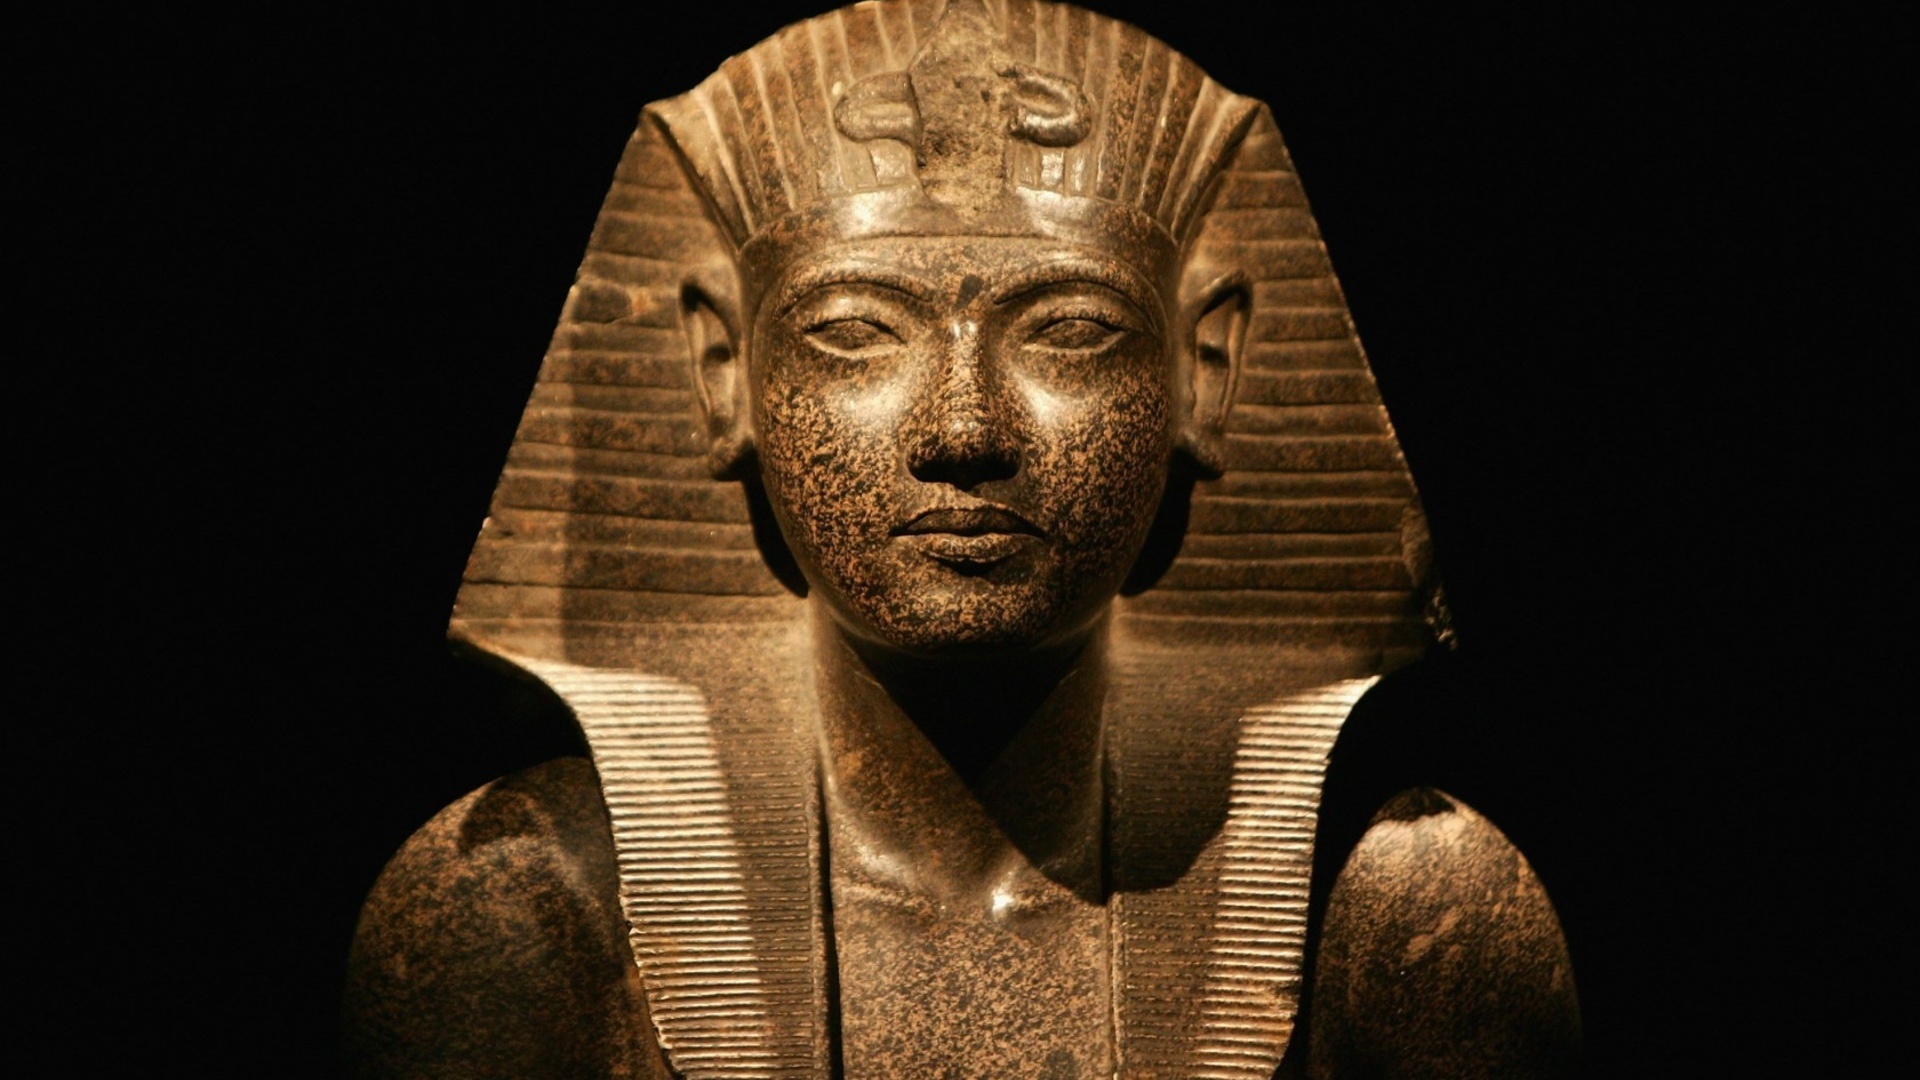 Sculpture statue Egypt, Pharaoh wallpapers, Artistic craftsmanship, Monumental beauty, 1920x1080 Full HD Desktop